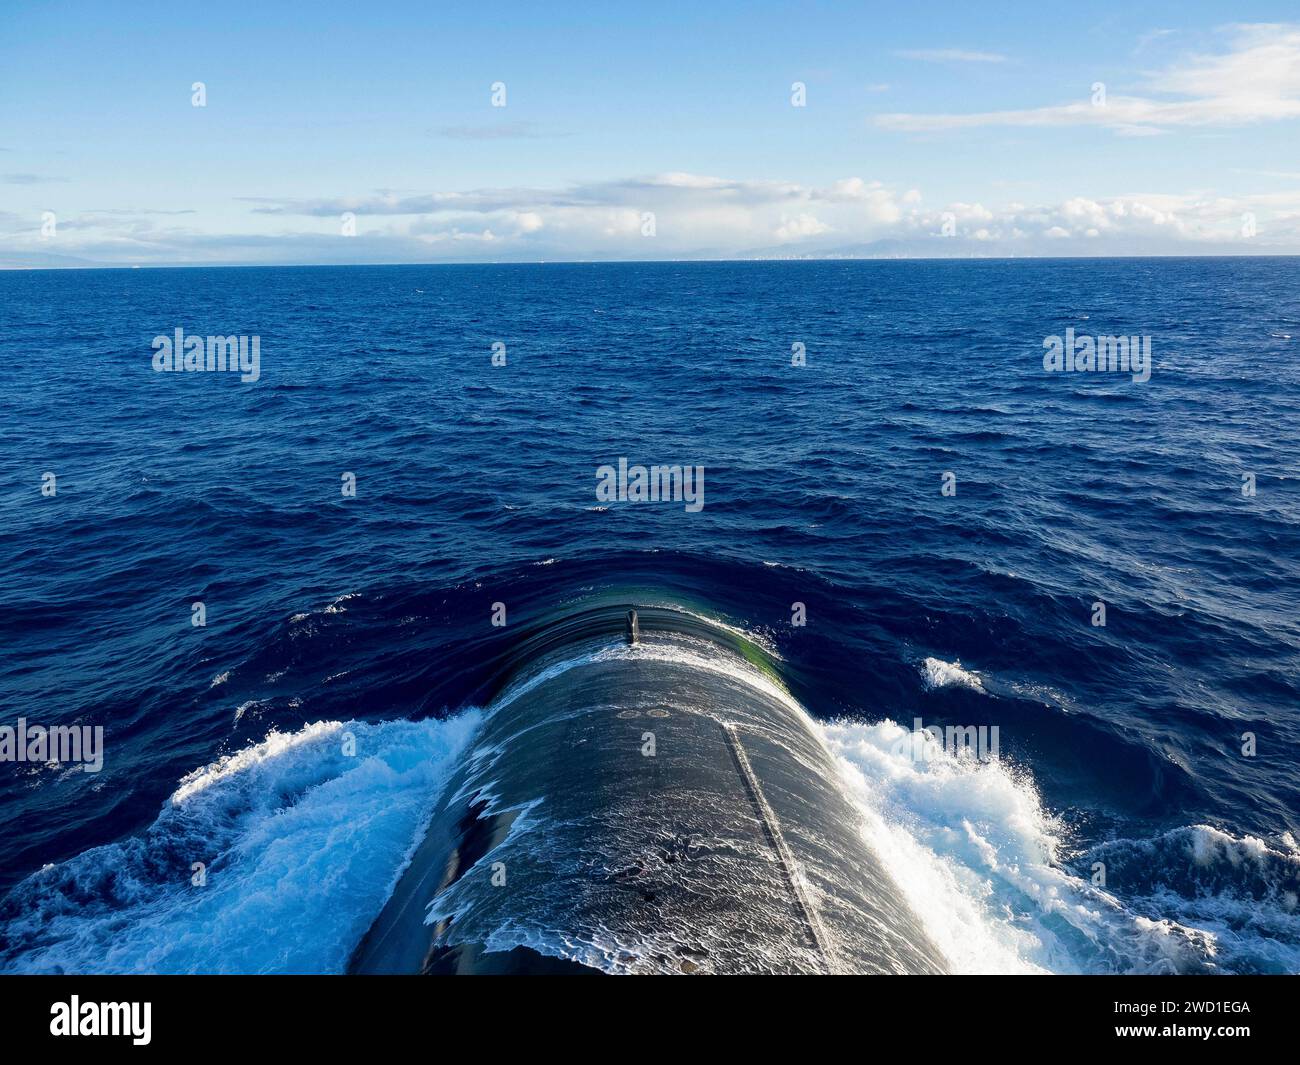 The Ohio-class ballistic missile submarine USS Nebraska transits the open ocean. Stock Photo